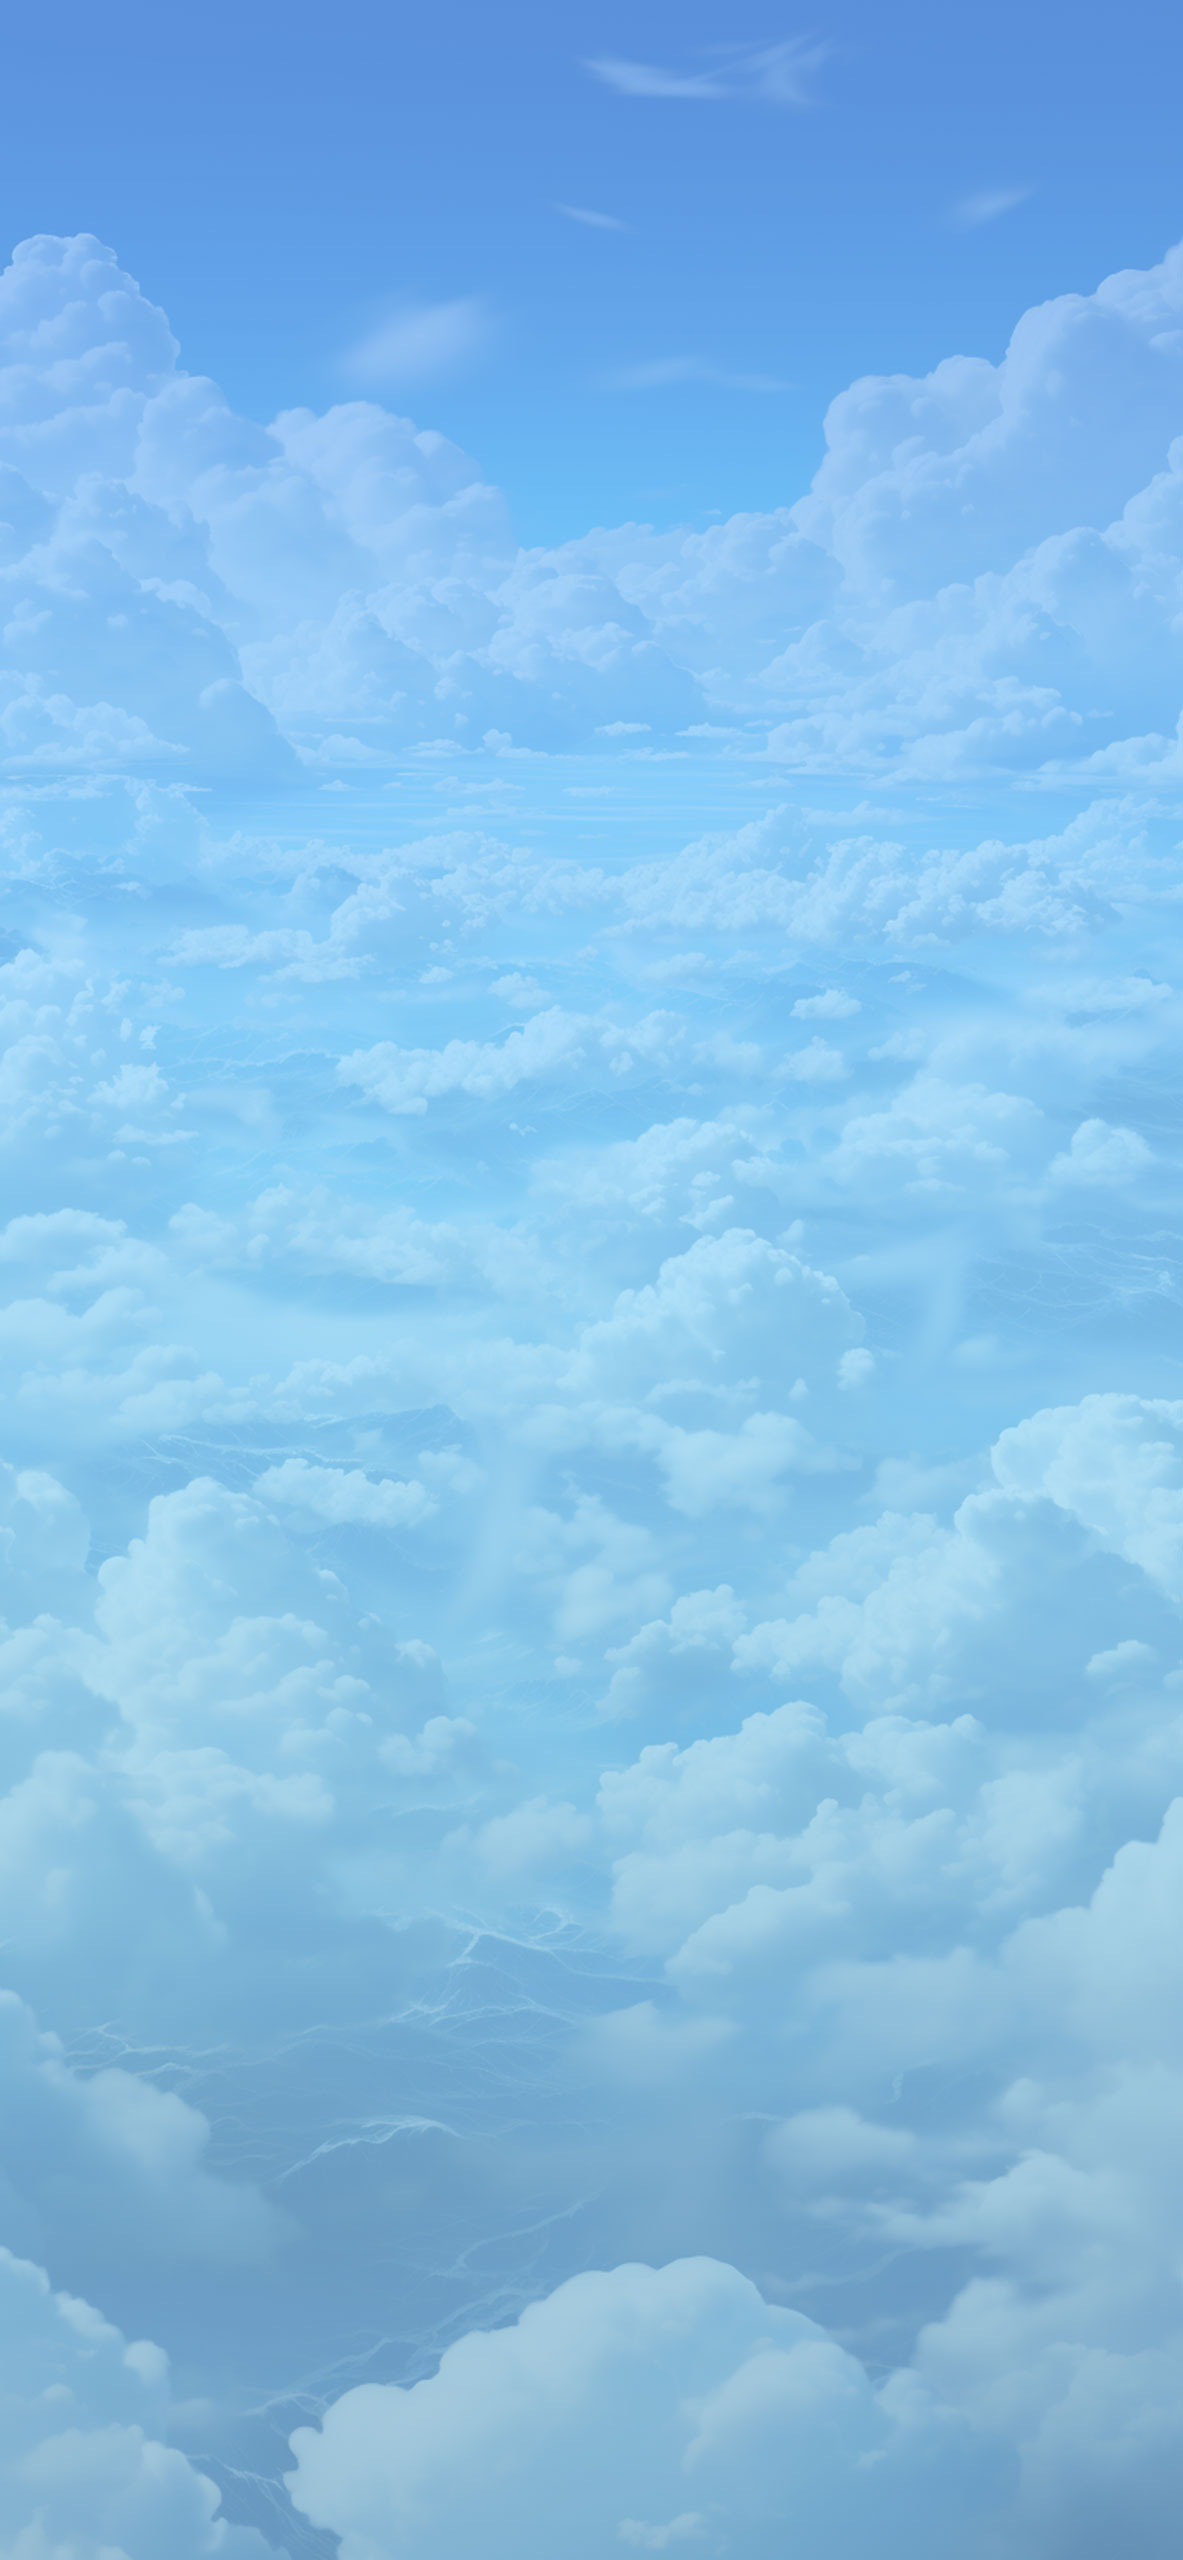 Aesthetic sky desktop wallpaper, dark | Free Photo - rawpixel